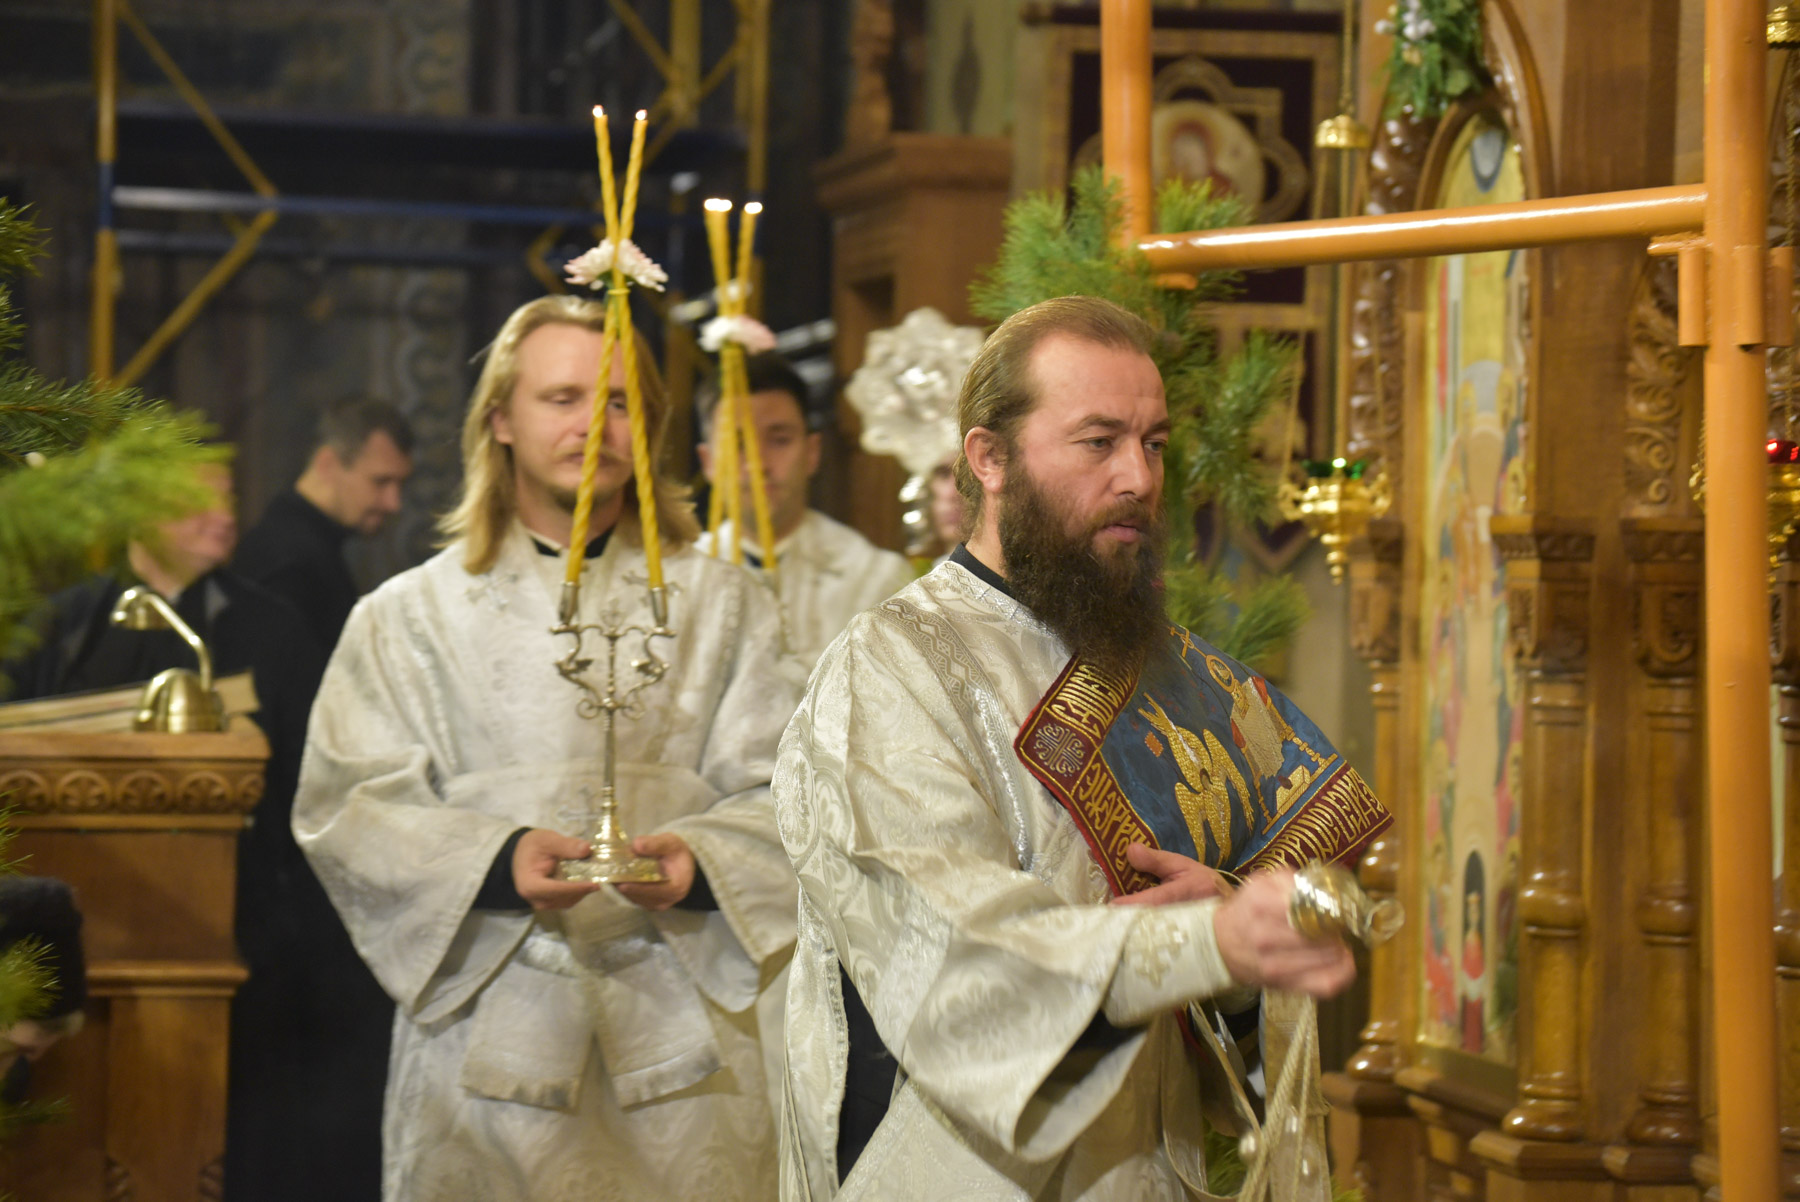 photos of orthodox christmas 0318